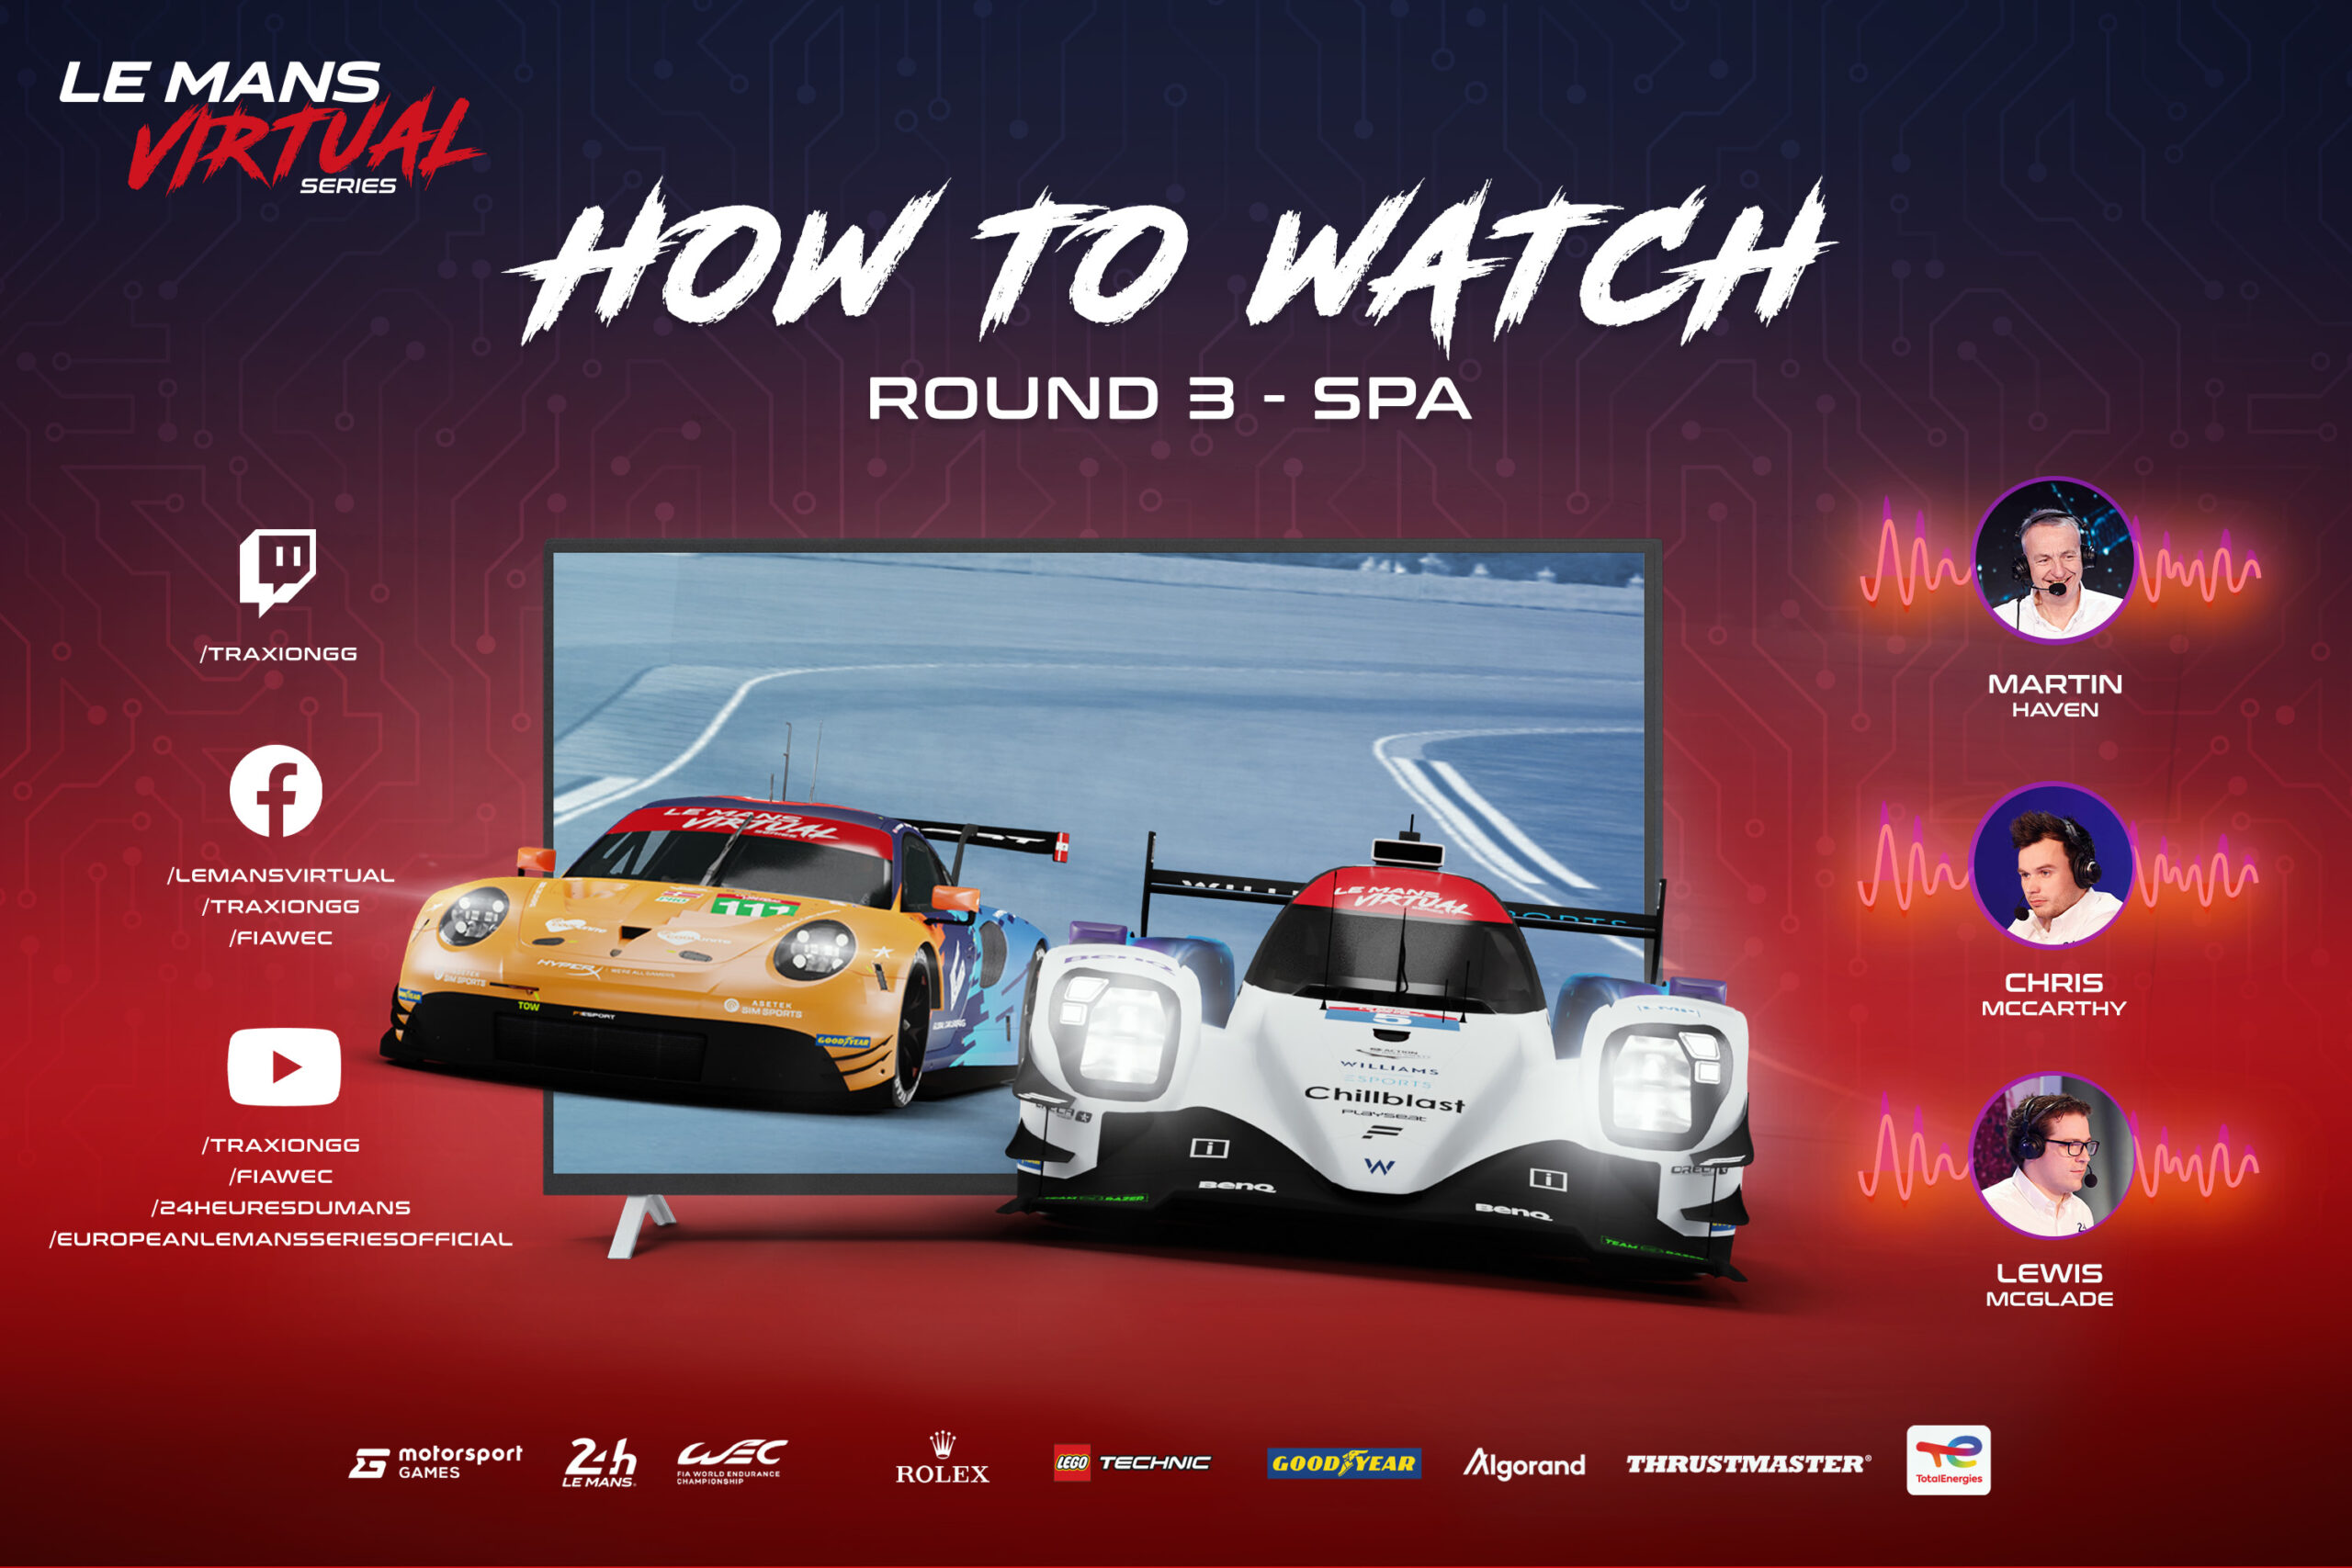 Le Mans Virtual Series